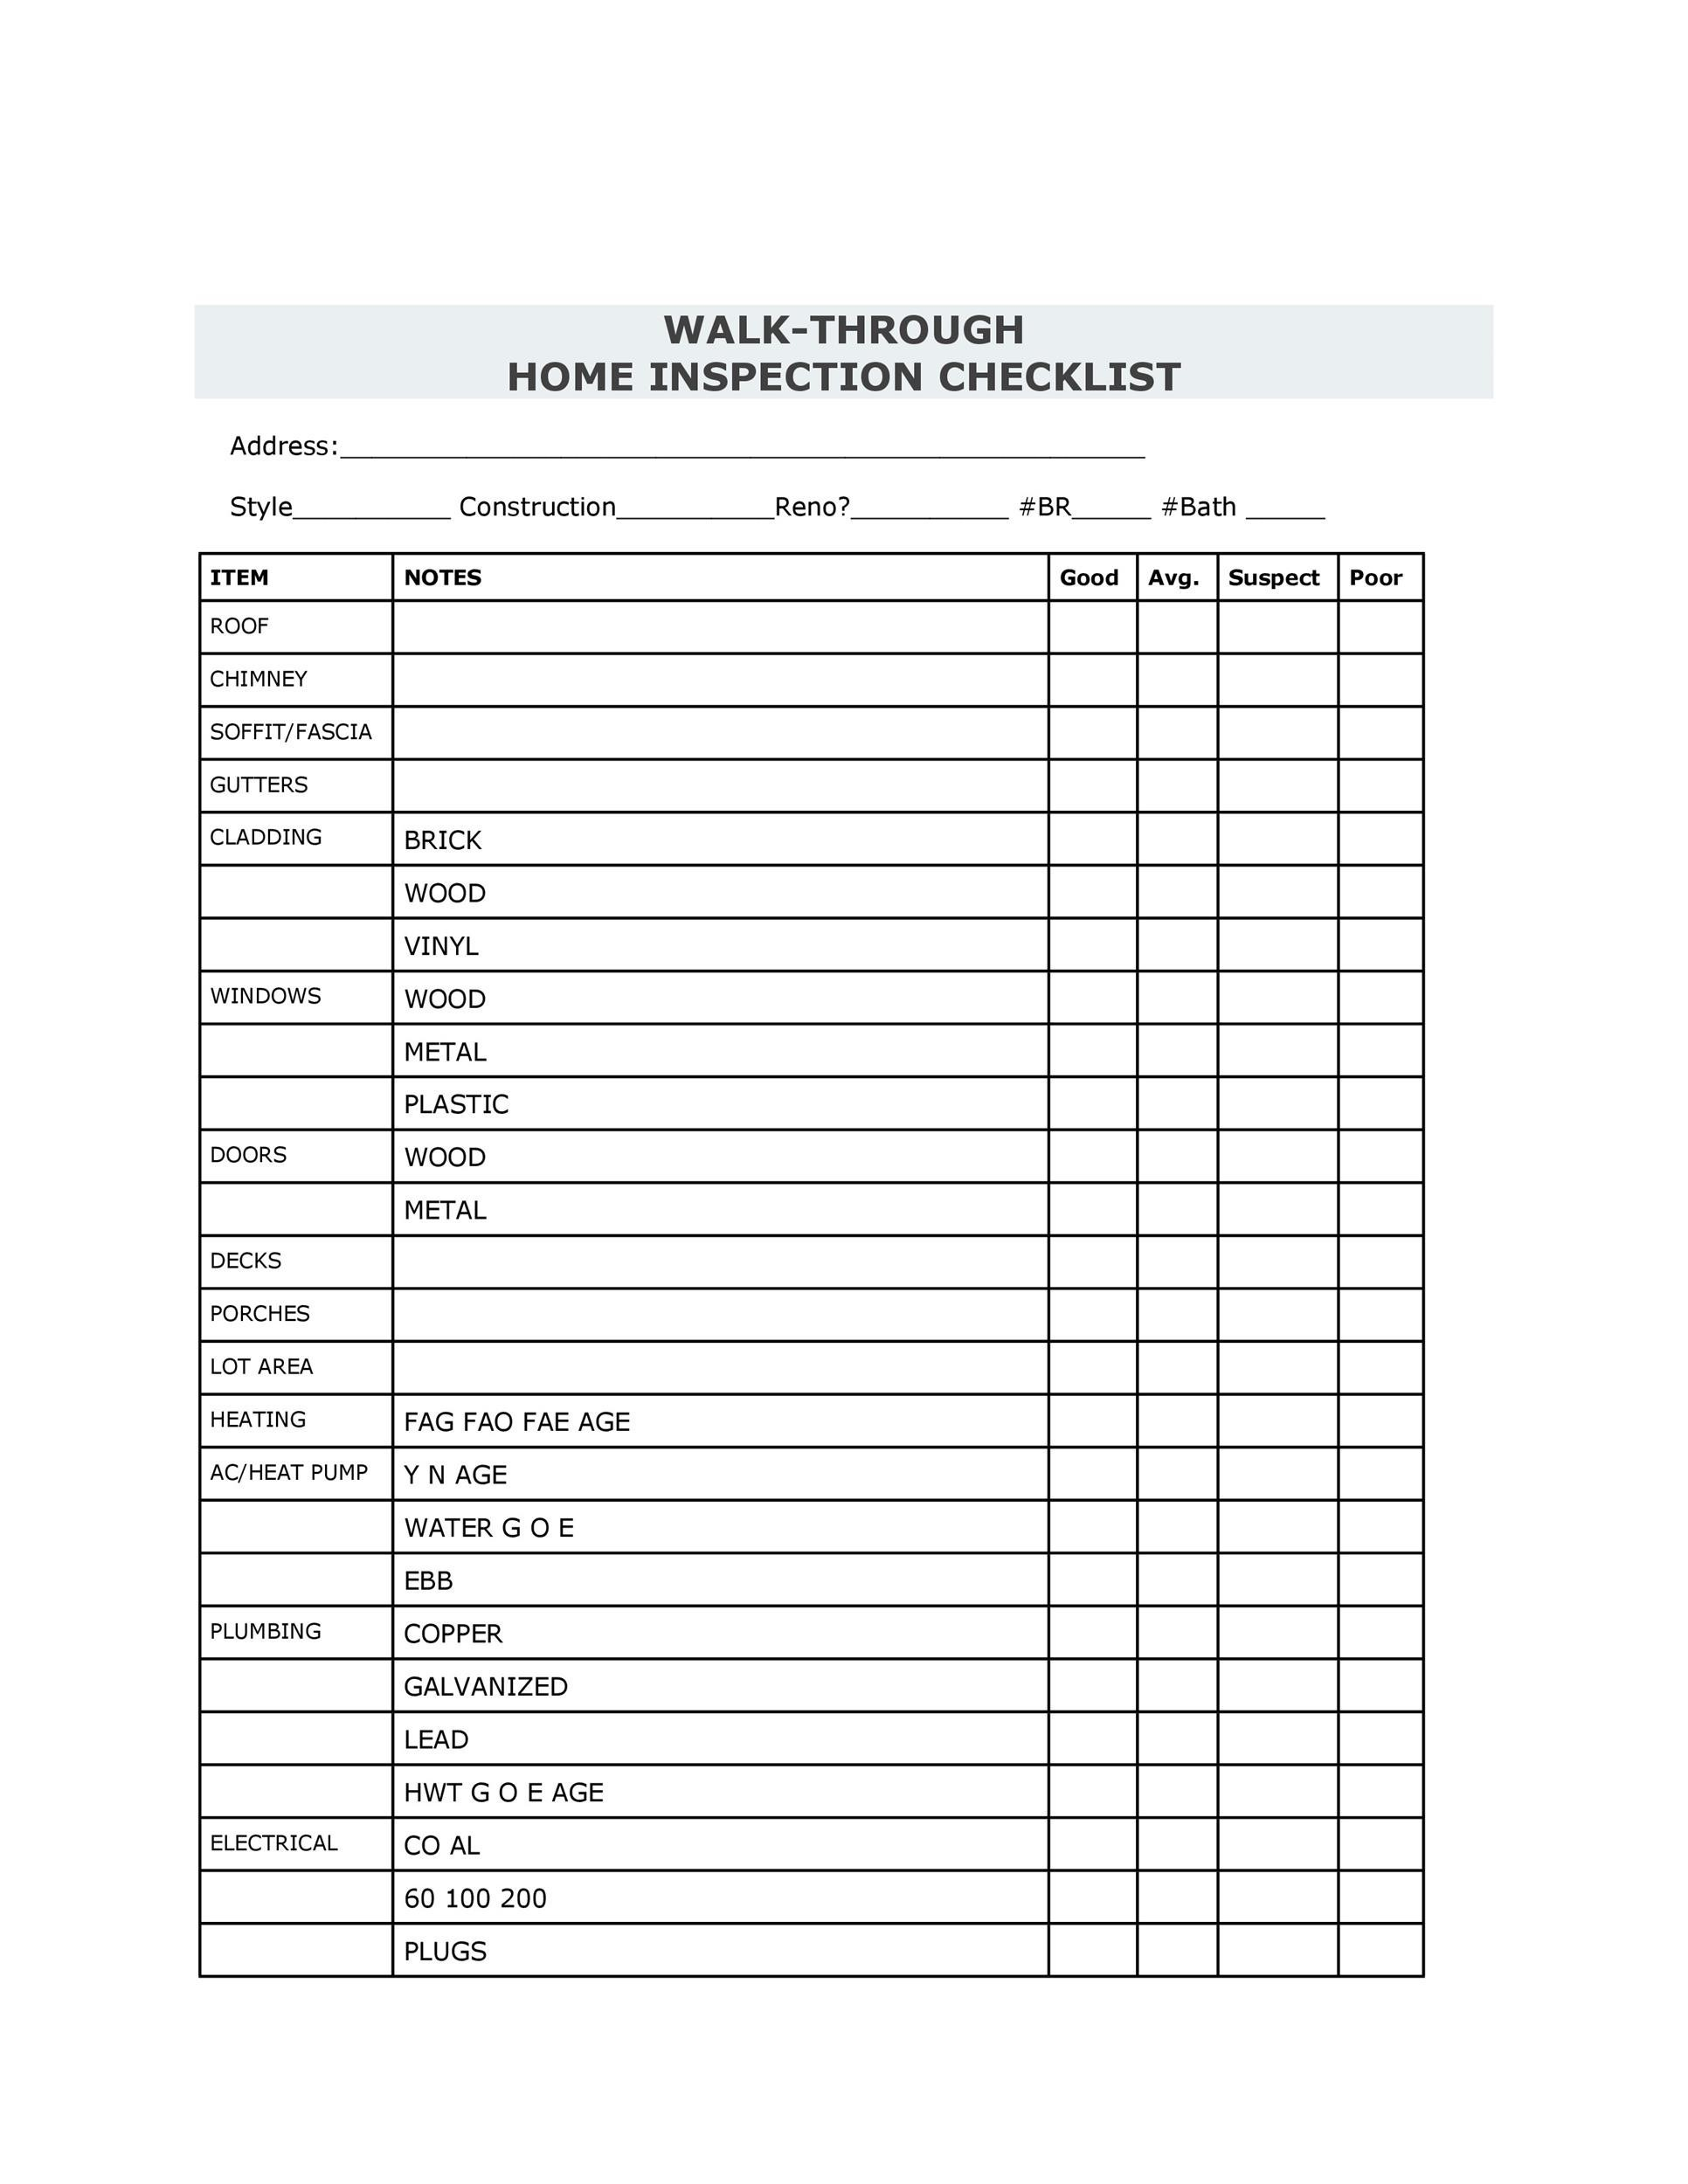 Home inspection checklist ontario pdf Regarding Home Inspector Checklist Template Throughout Home Inspector Checklist Template